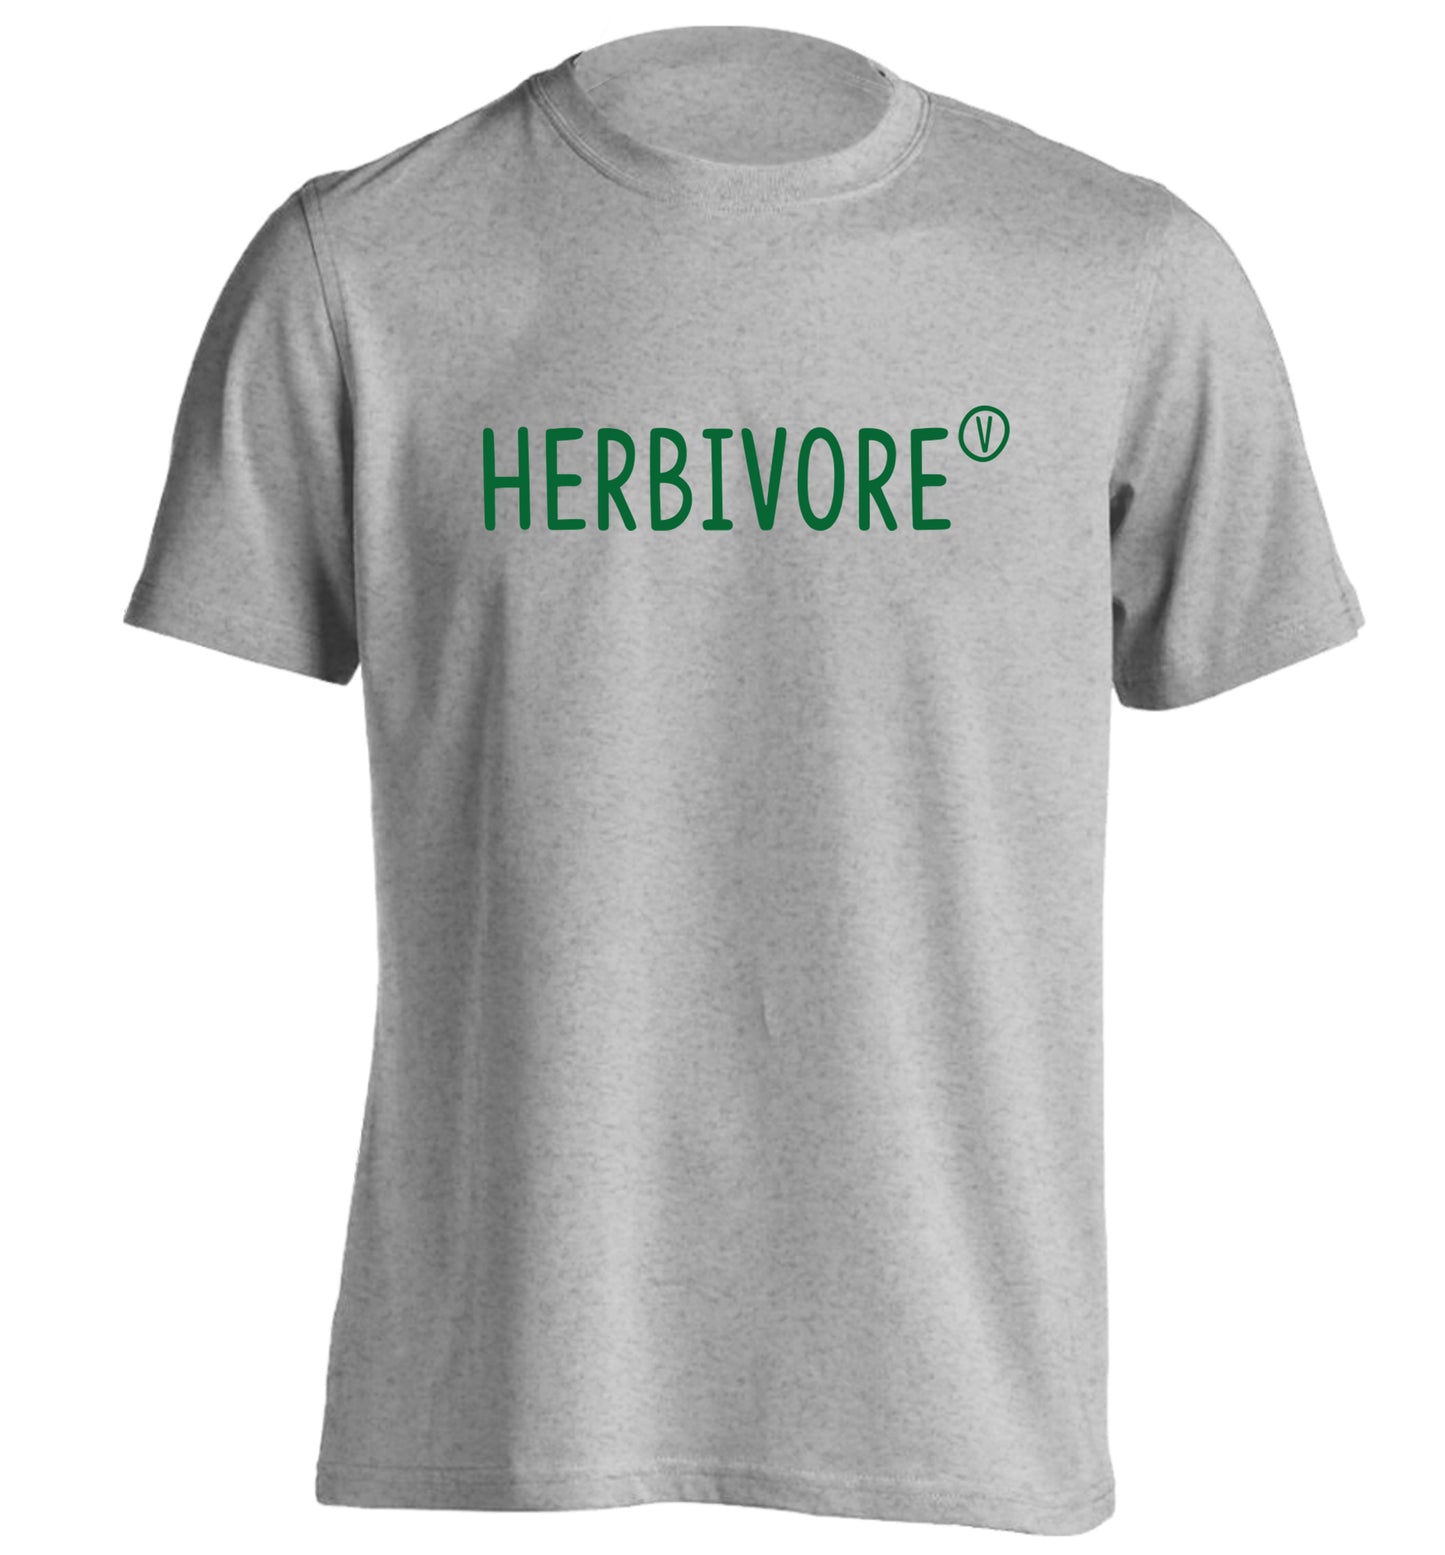 Herbivore adults unisex grey Tshirt 2XL